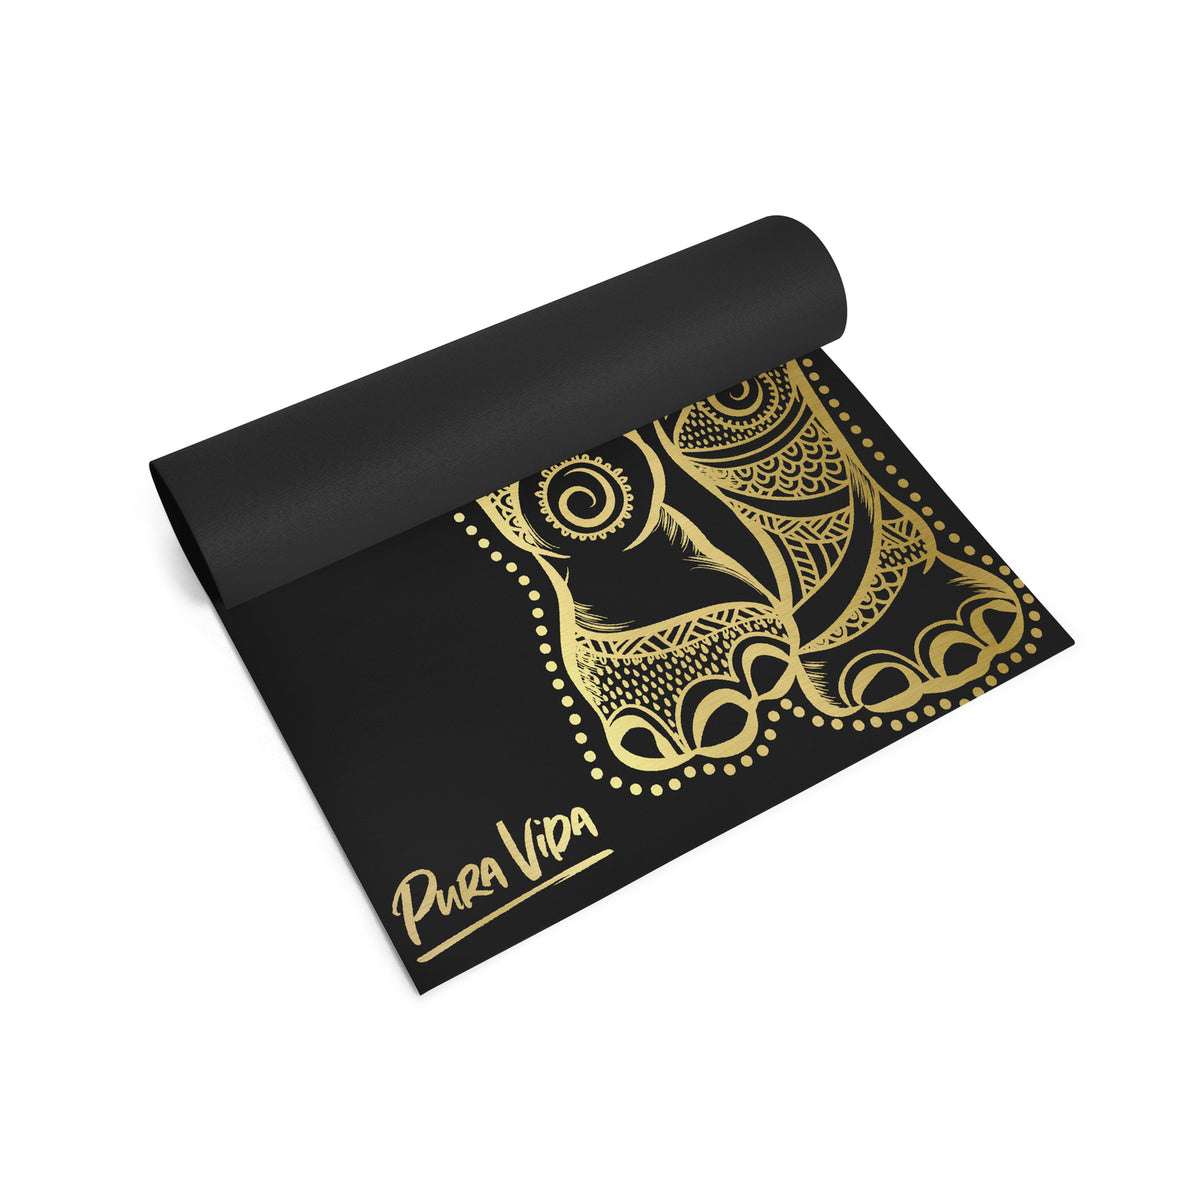 Gaiam Bronze Medallion Yoga Mat, Black/Gold, 4-mm